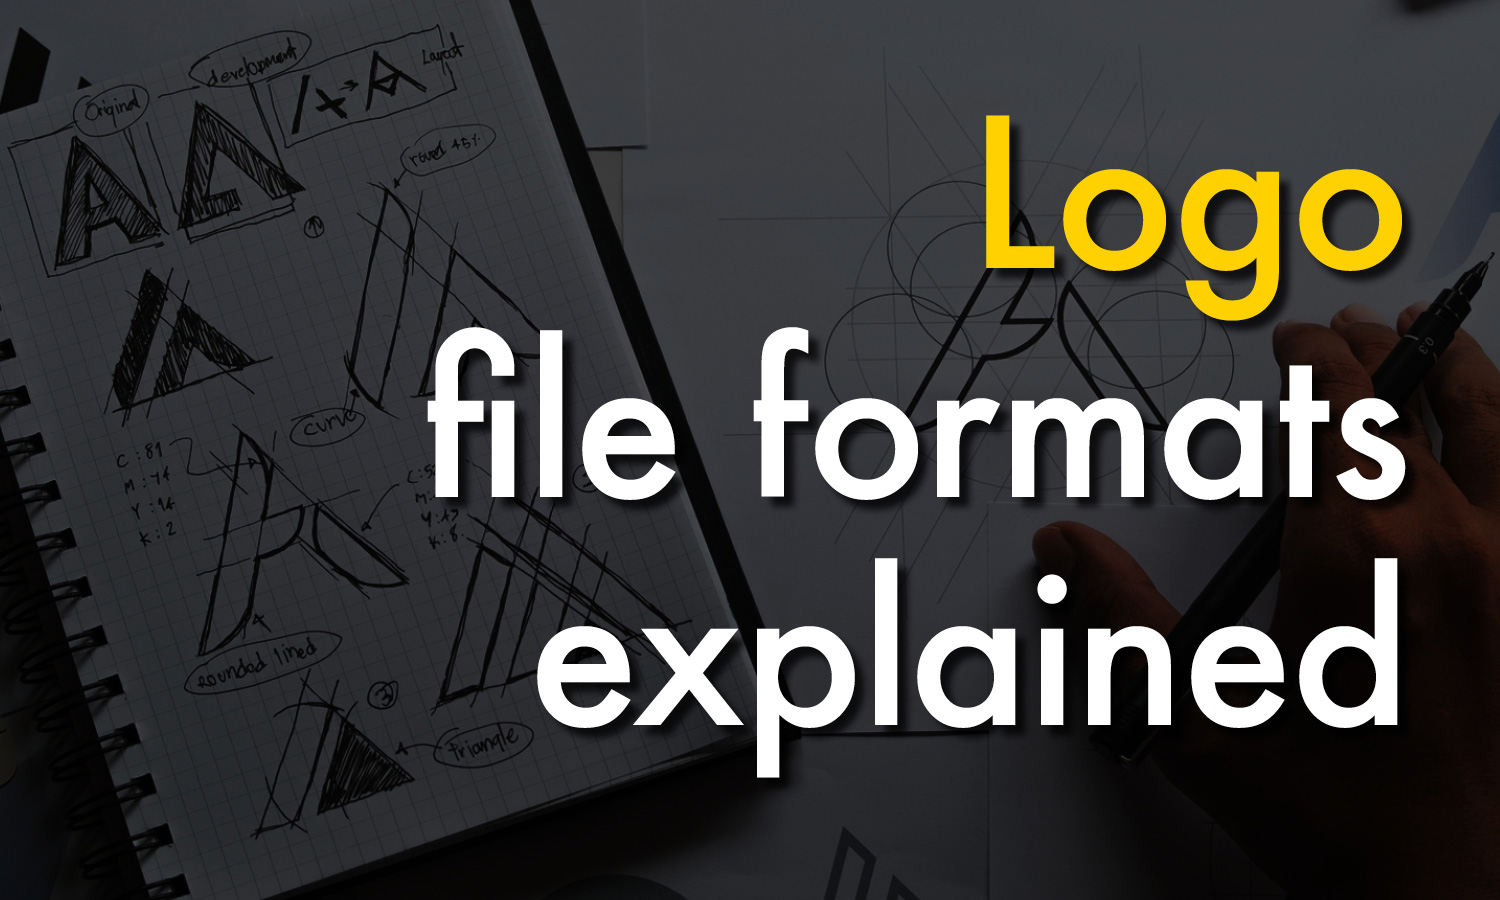 Logo File Formats For Print Understanding Logo Formatting